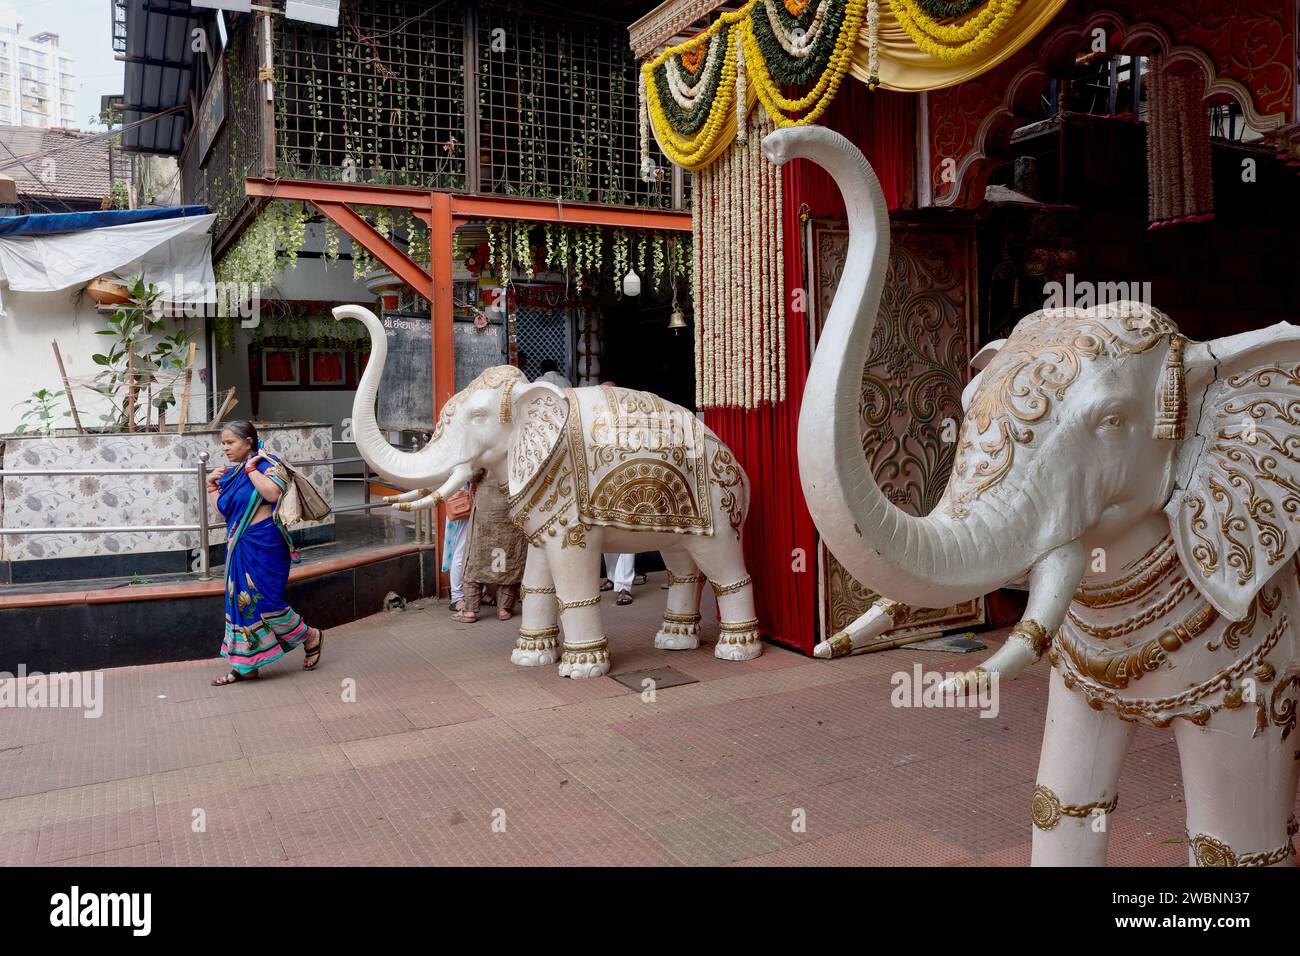 Due statue di elefanti con tronchi rialzati accolgono i visitatori all'ingresso di una sala festival indù a Panjrapole, Bhuleshwar, Mumbai, India Foto Stock